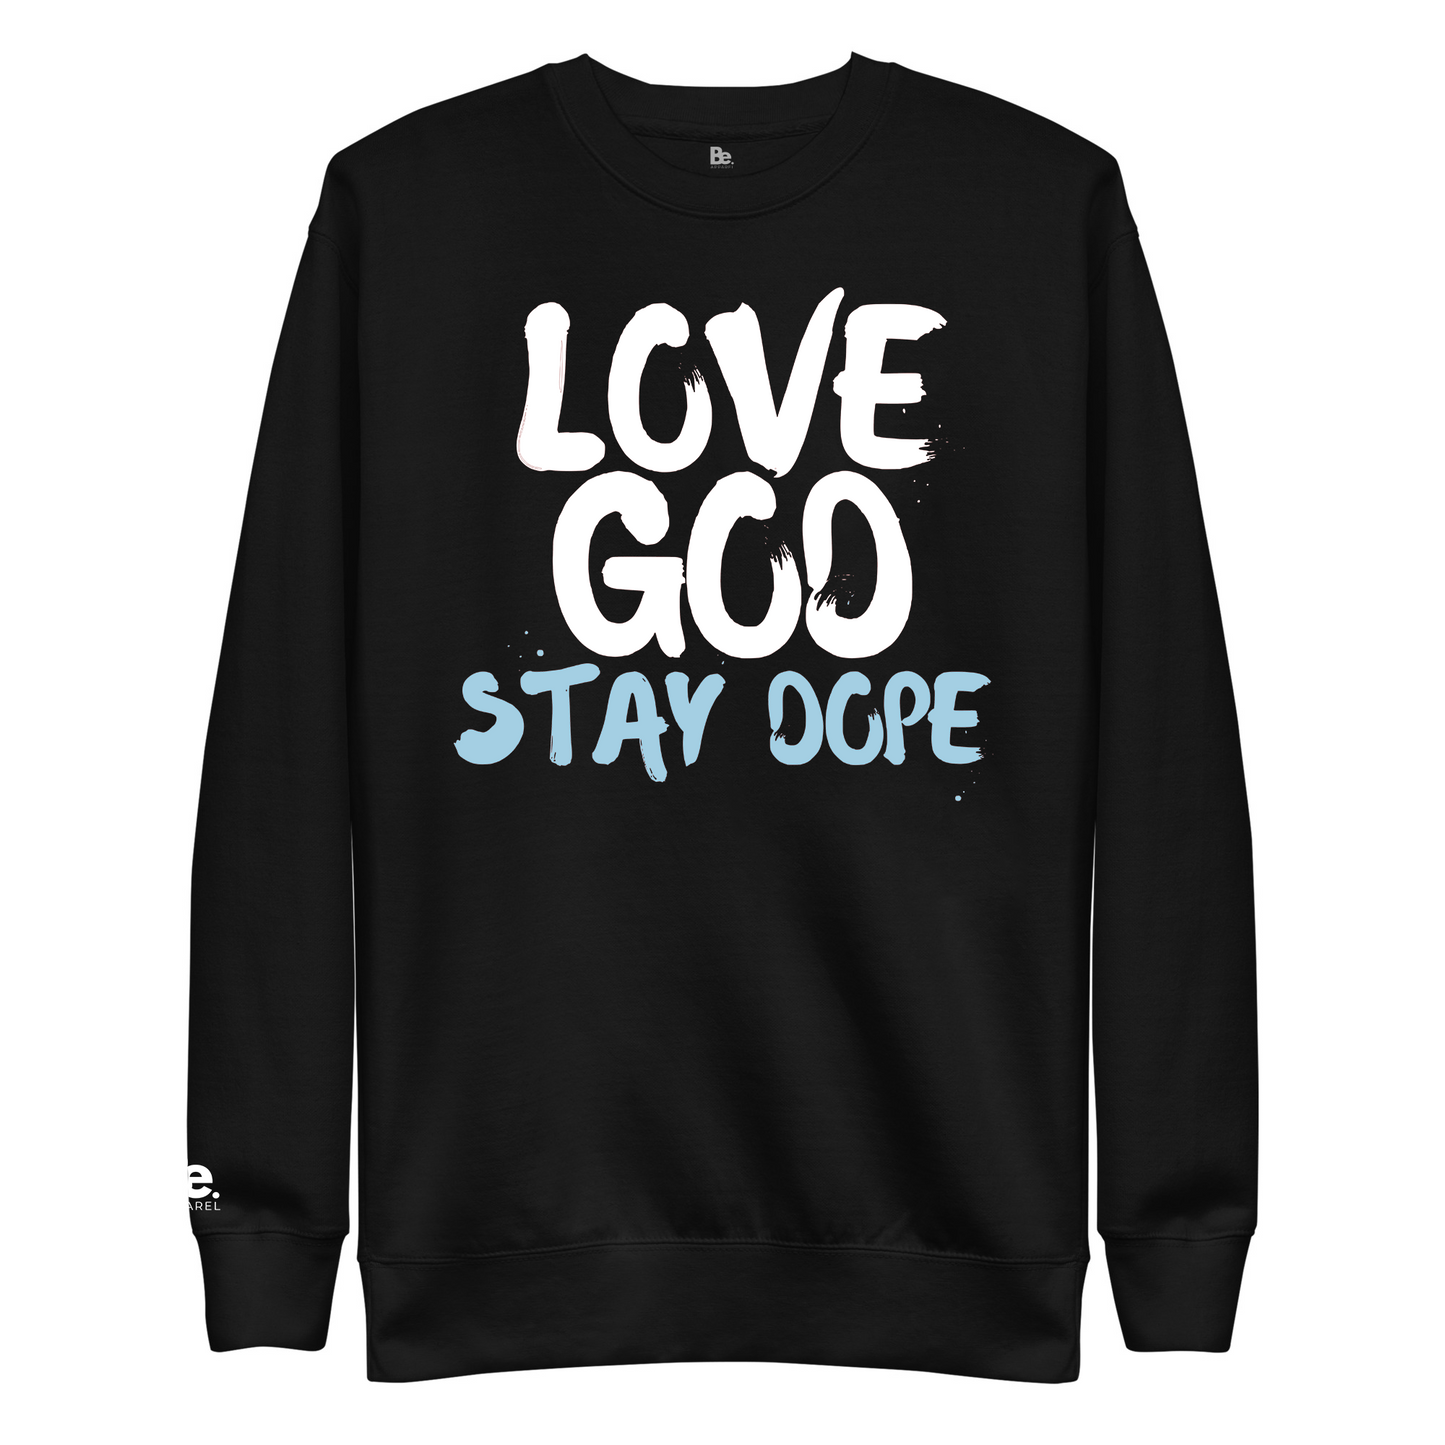 Love God Stay Dope Sweatshirt